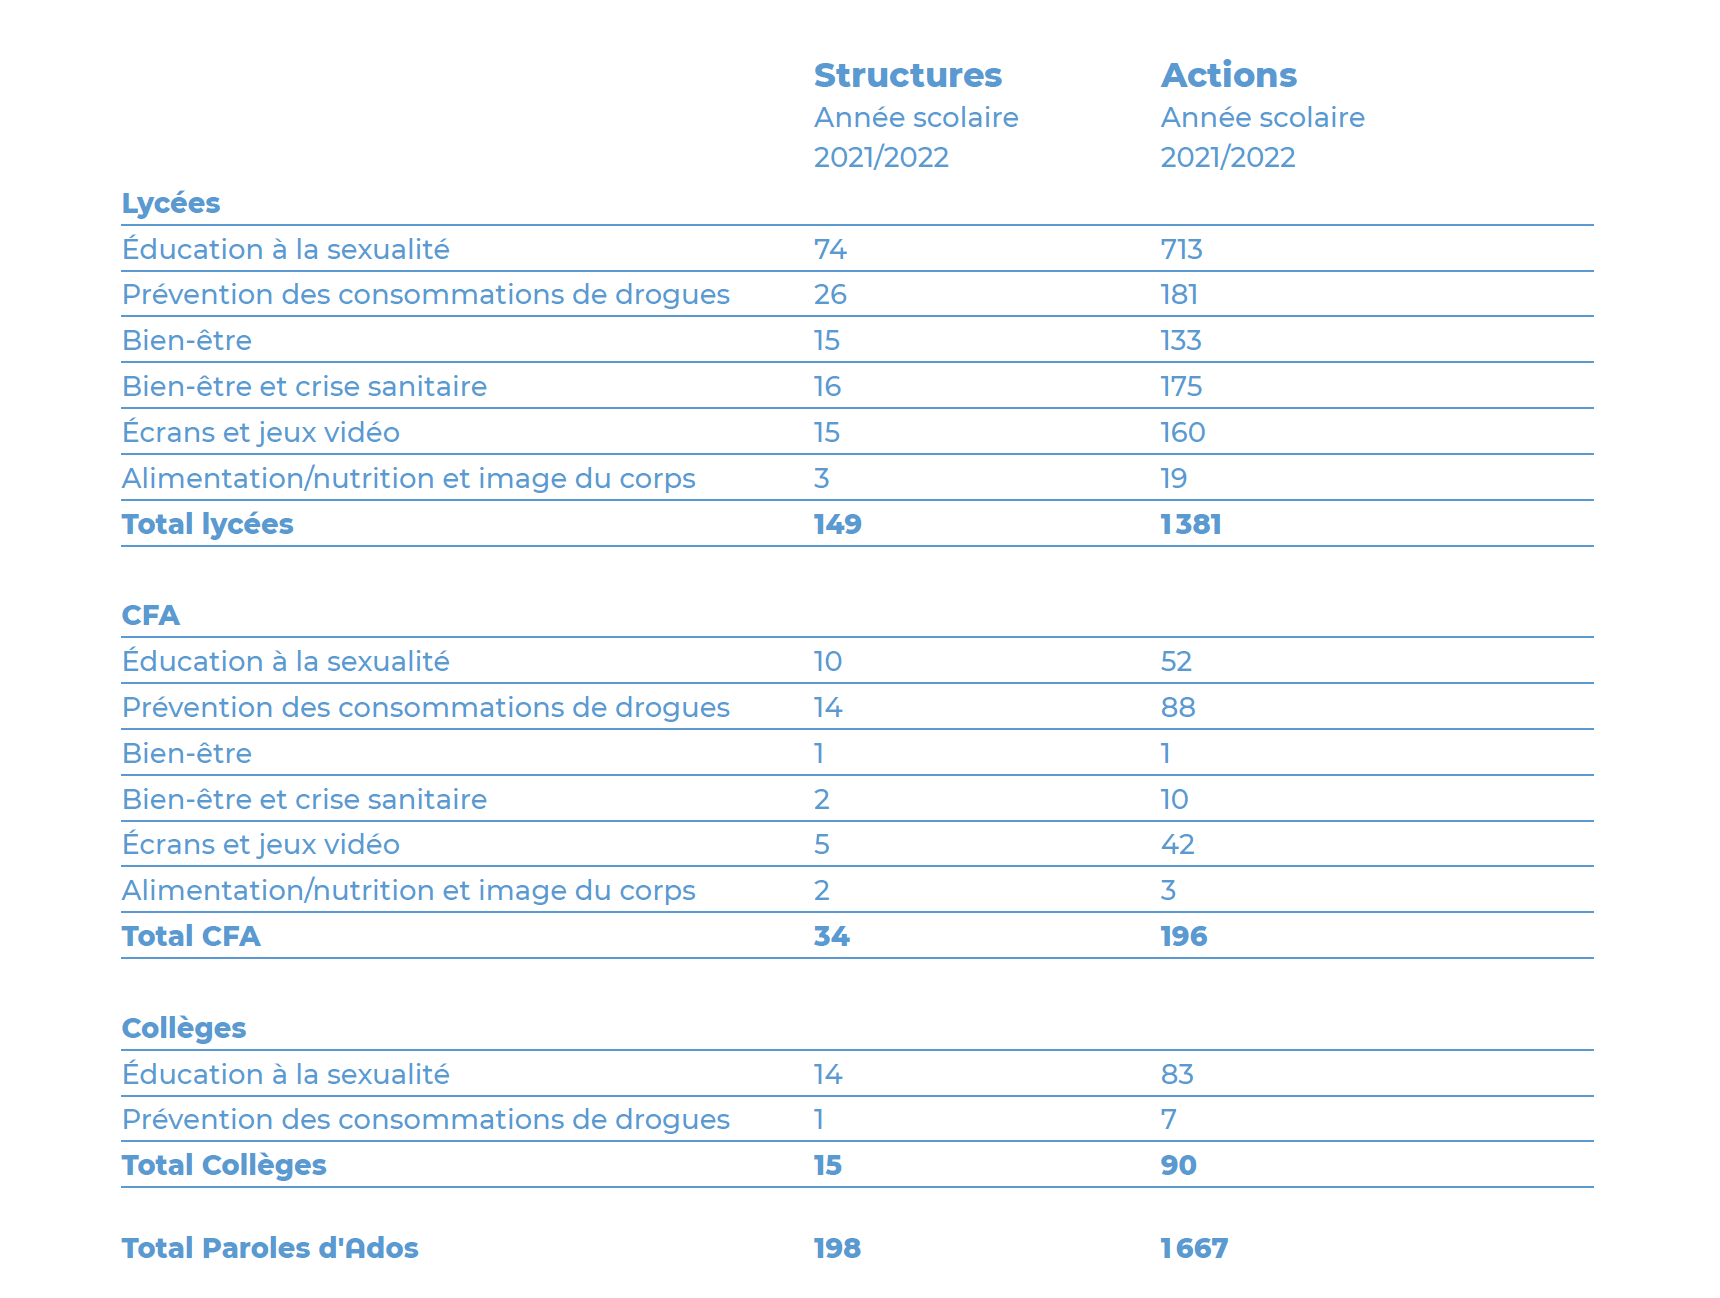 crips-evaluation-paroles-ados-tableau-actions-2022